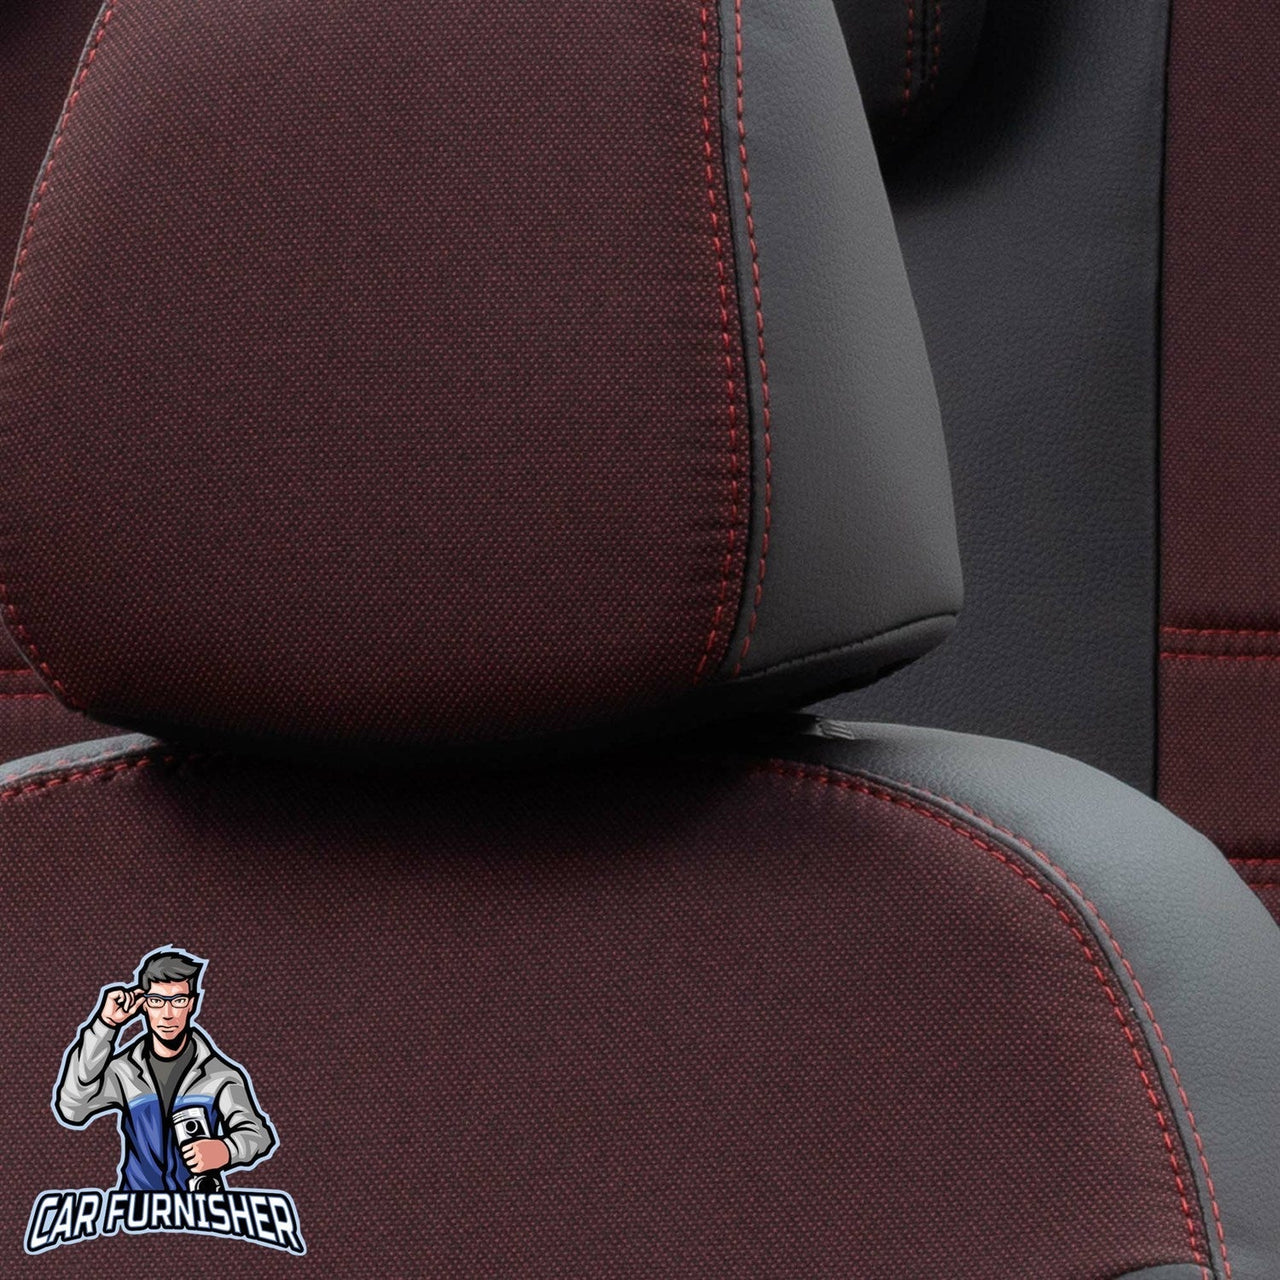 Hyundai Ioniq Seat Covers Paris Leather & Jacquard Design Red Leather & Jacquard Fabric